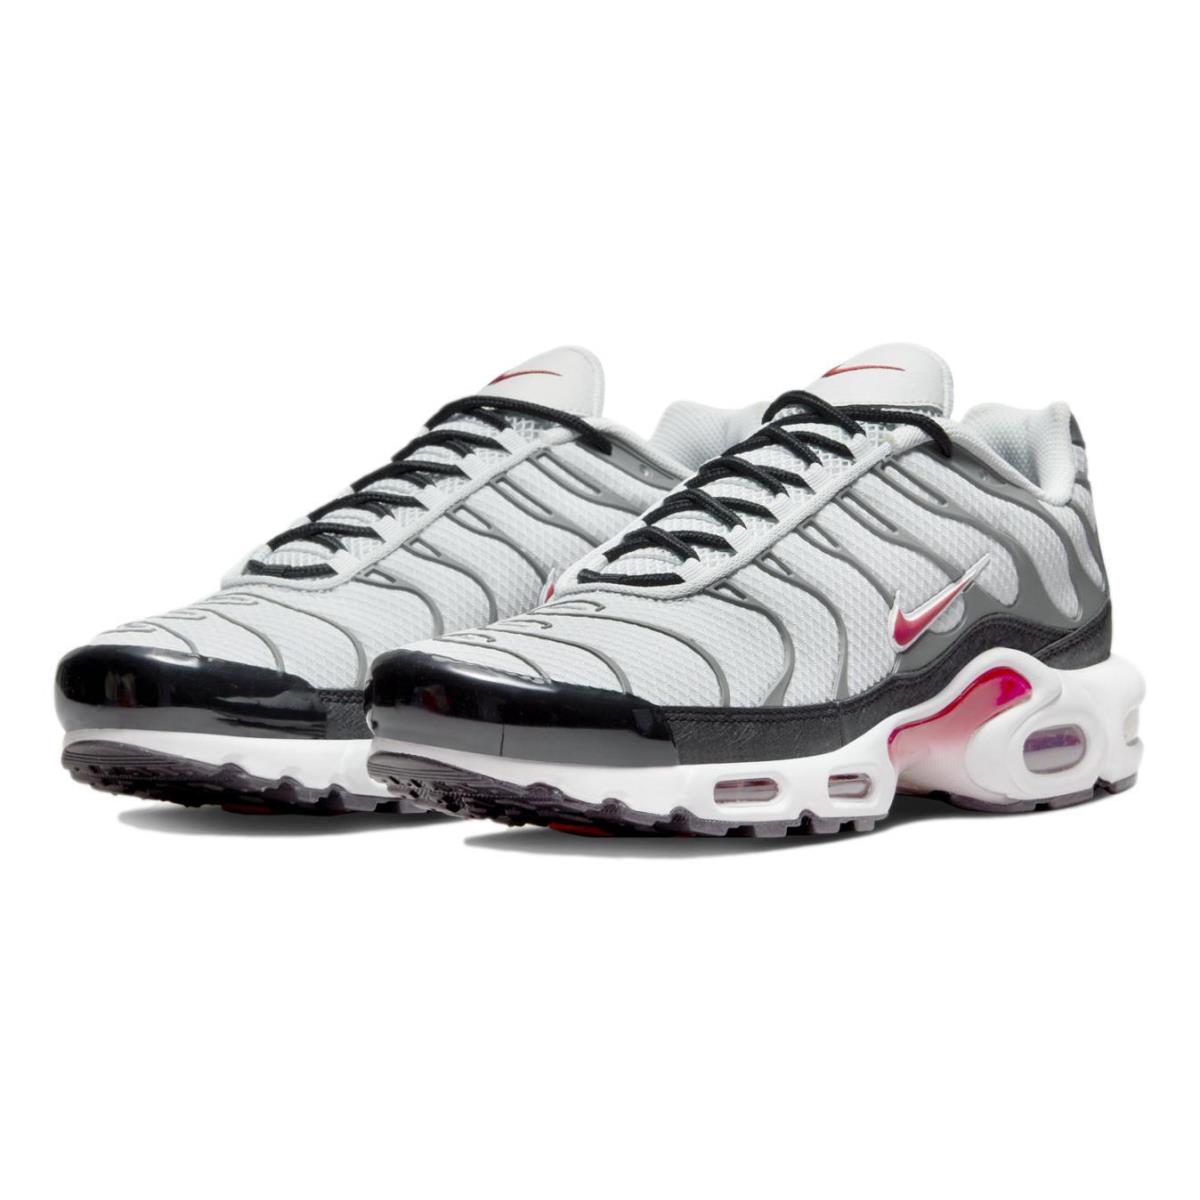 Nike Men`s Air Max Plus `photon Dust Particle Grey` Shoes Sneakers DM0032-002 - Photon Dust/Varsity Red